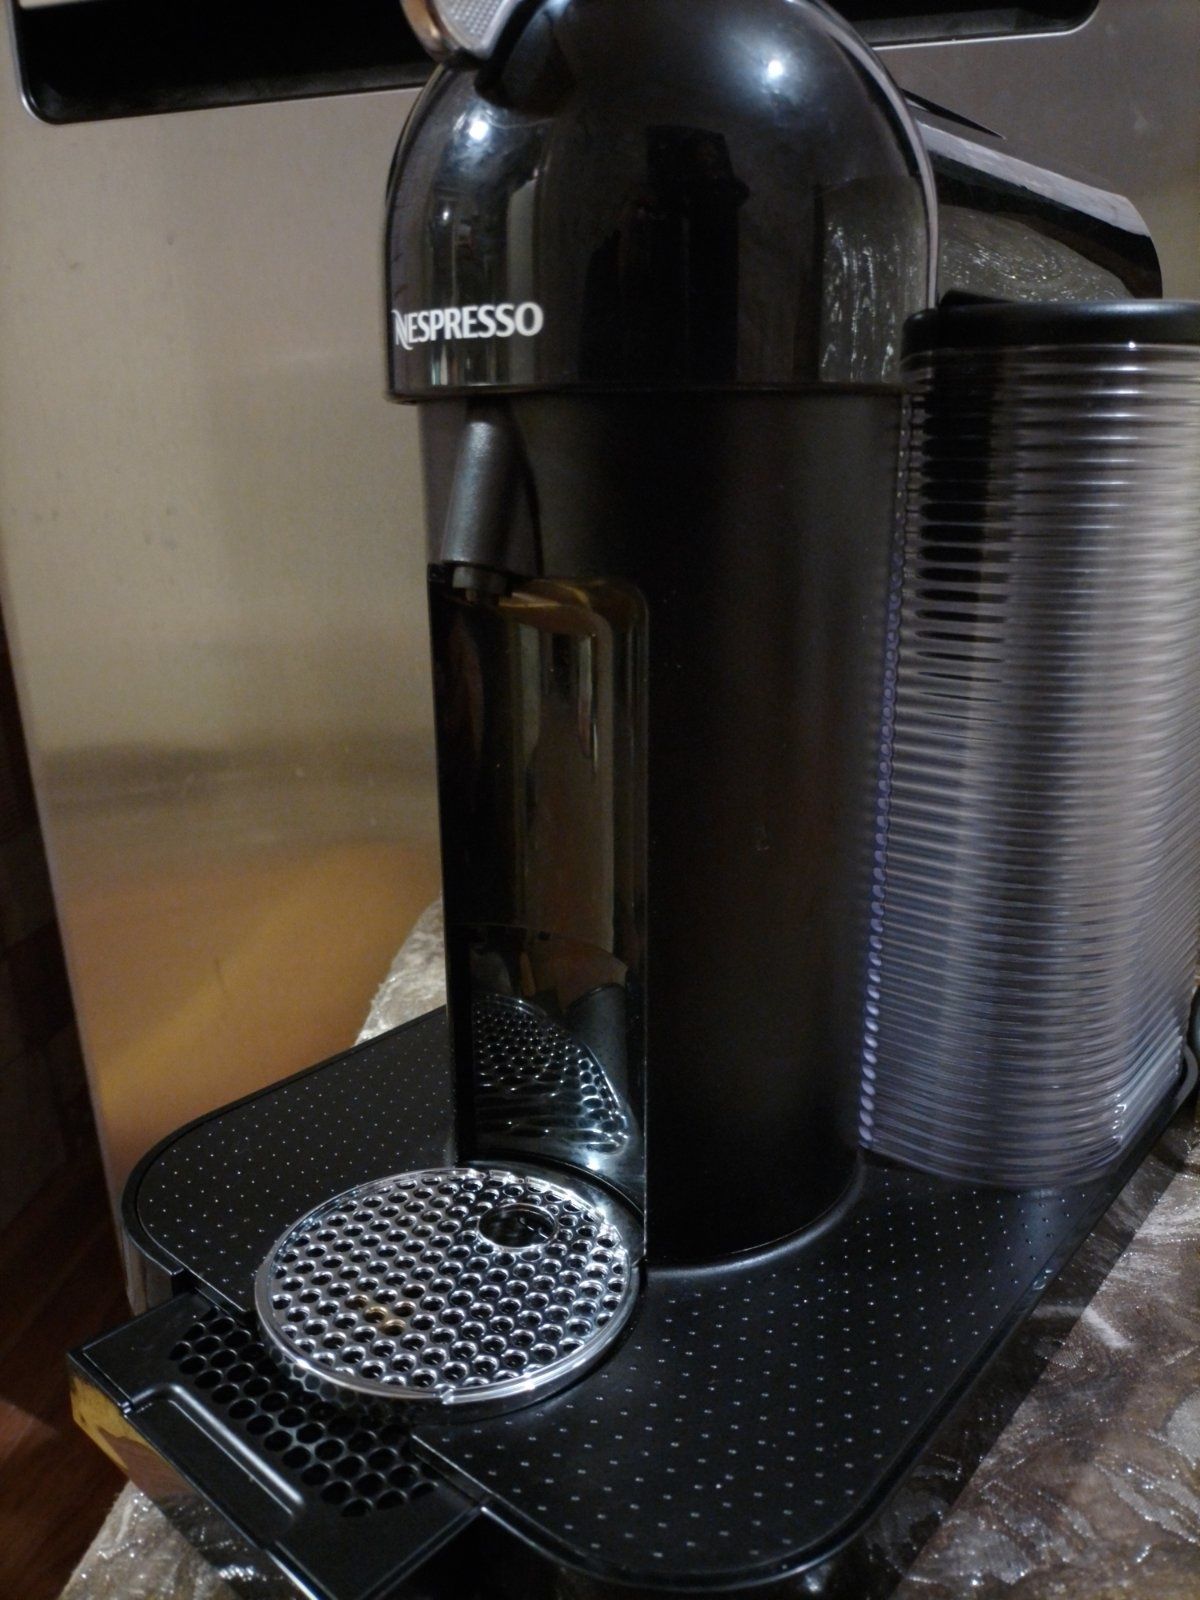 Неспрессо кофе-машина